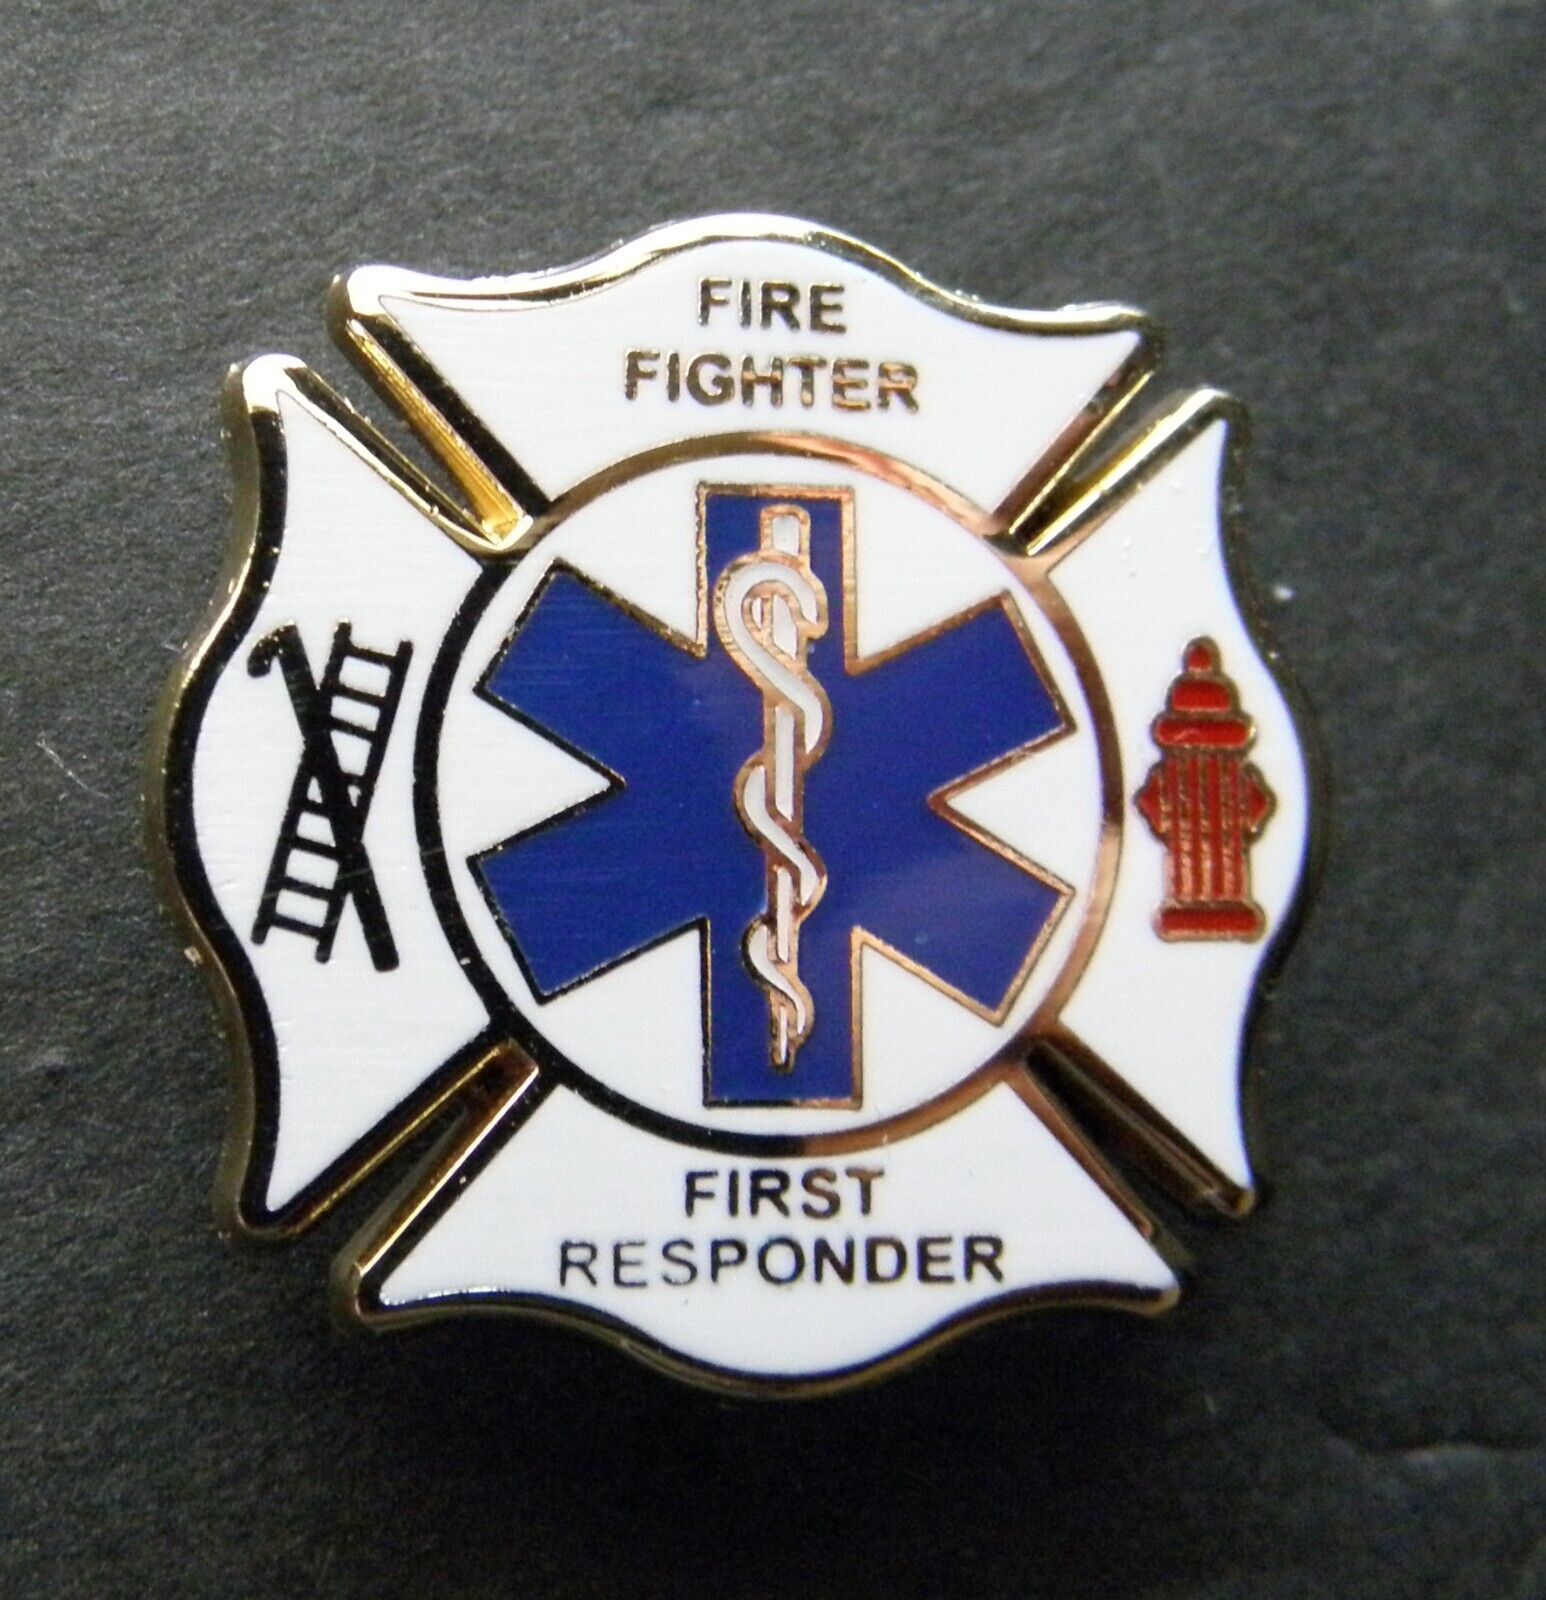 FIREFIGHTER FIRE FIGHTER EMT EMS FIRST RESPONDER LAPEL PIN 1 INCH